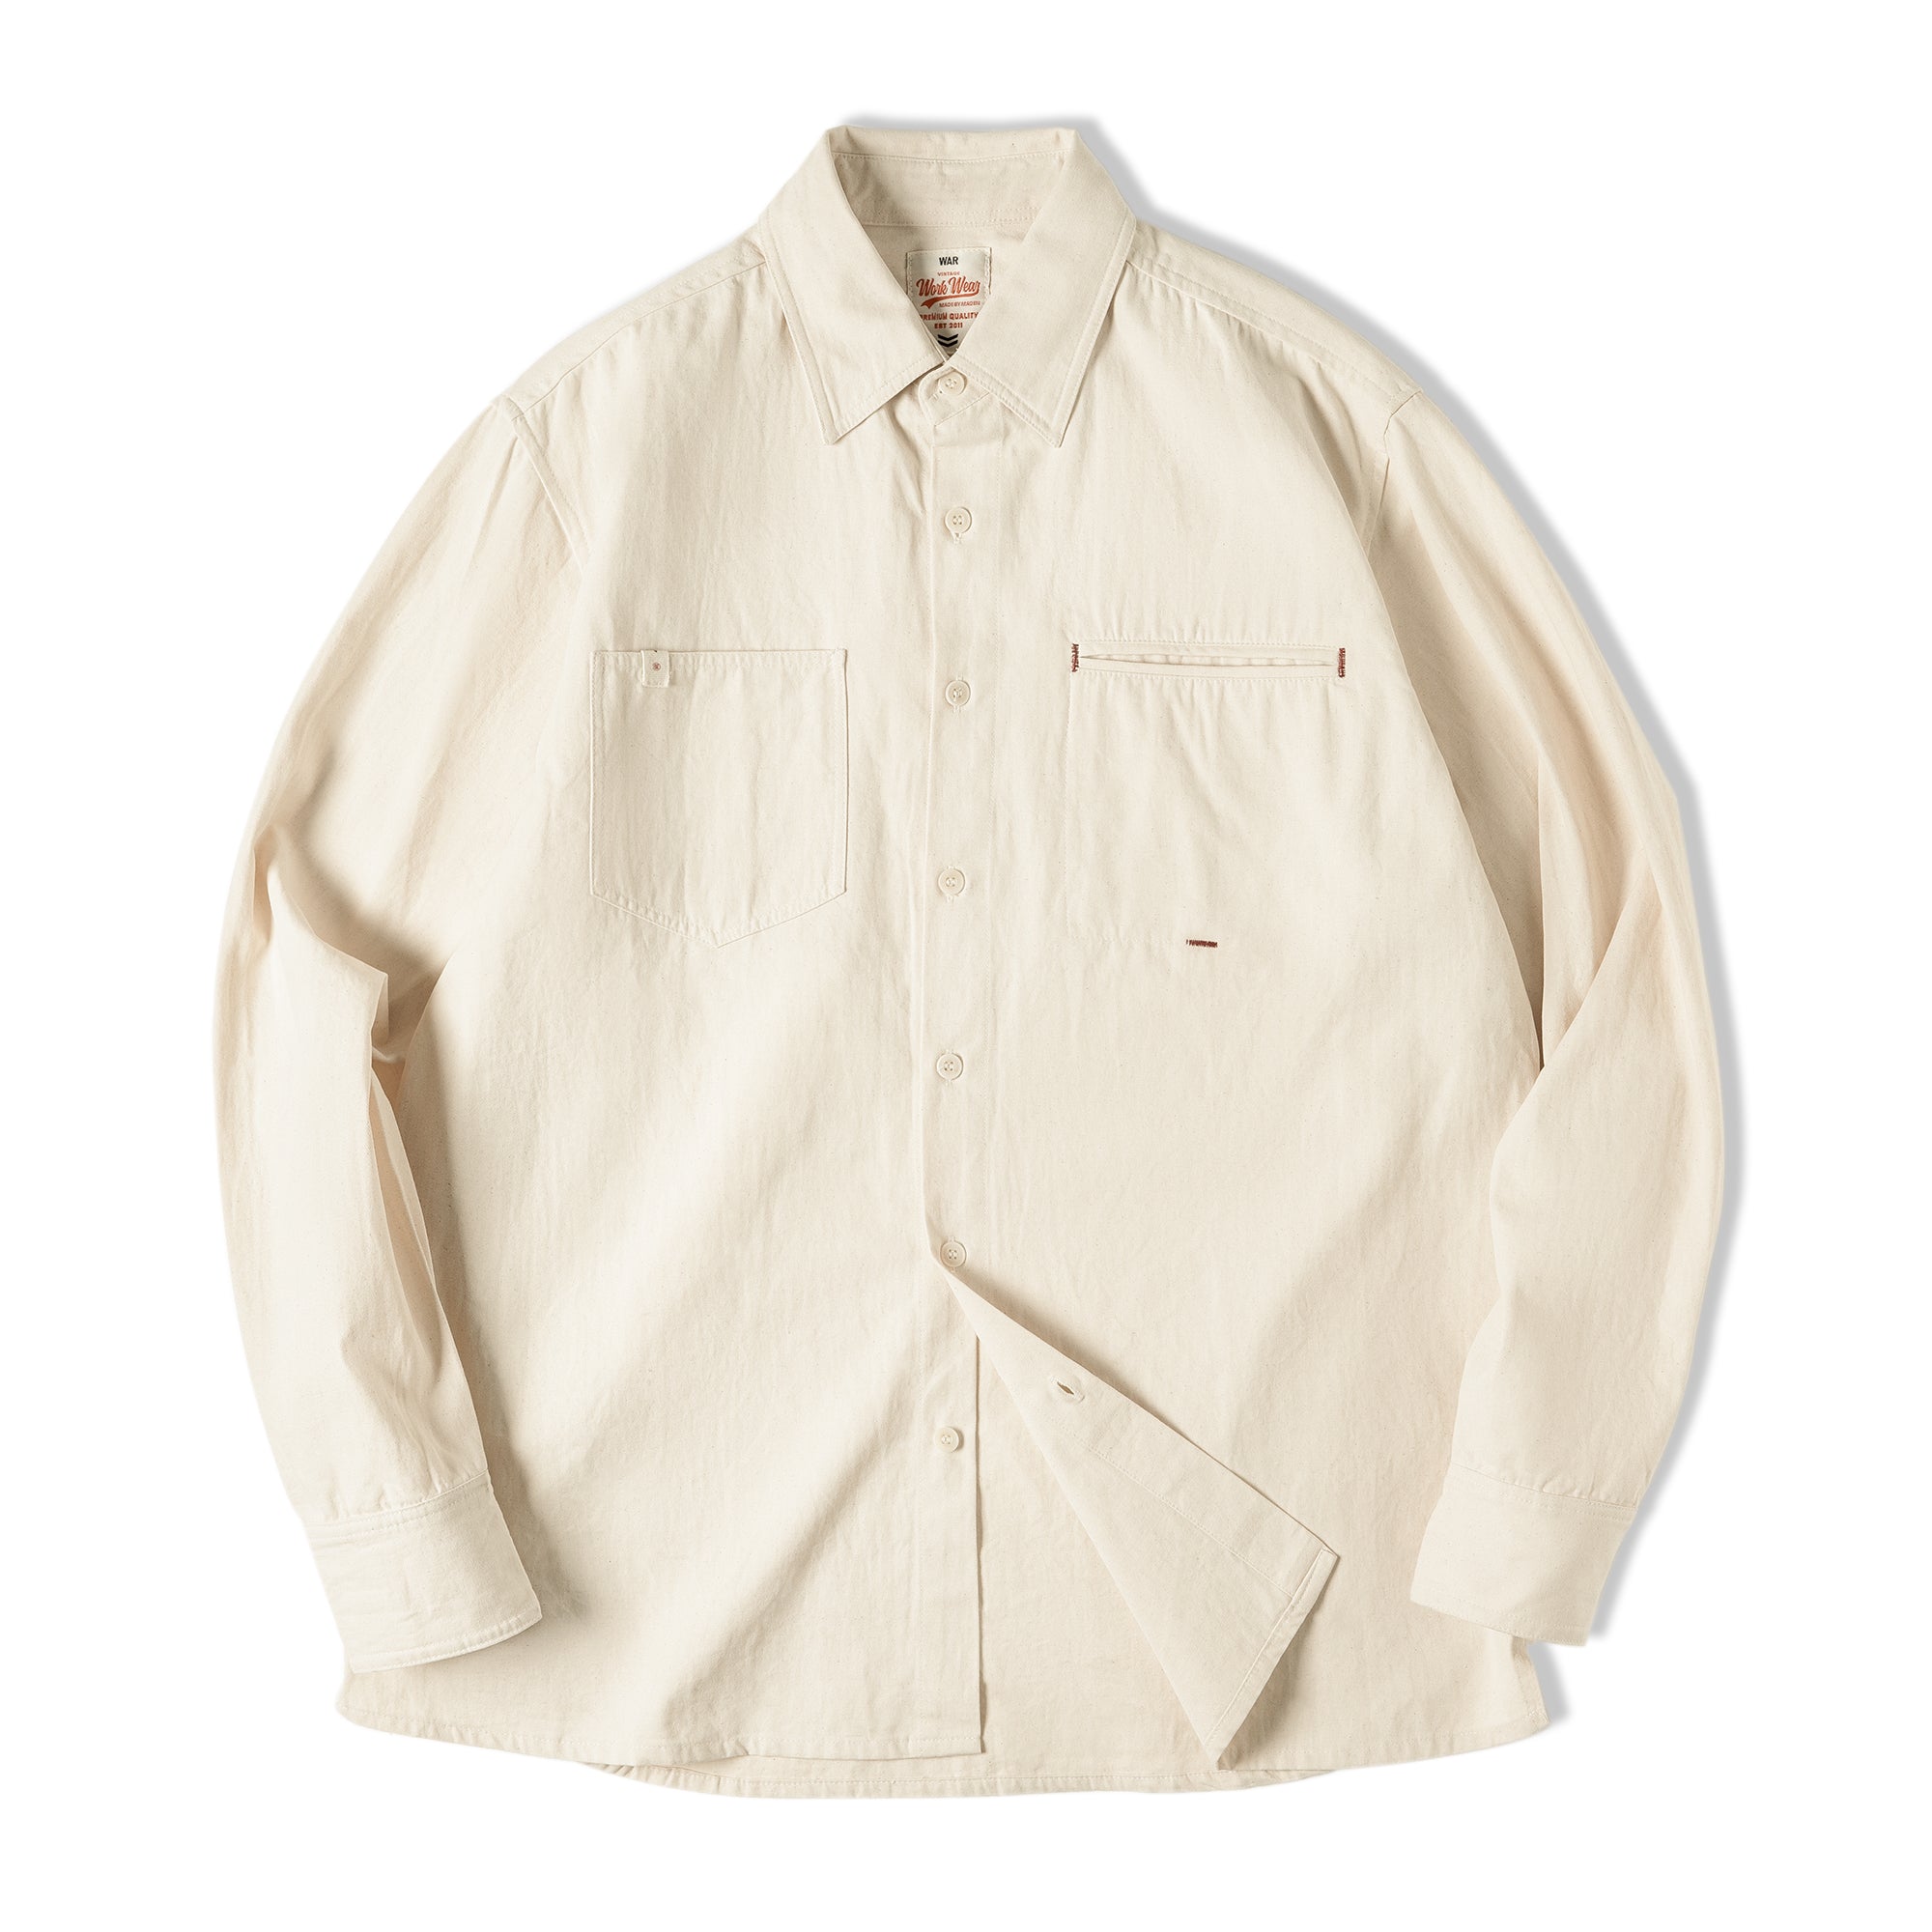 Retro Lapel Cottonseed Shell Shirt Jacket - Men's Khaki Tops